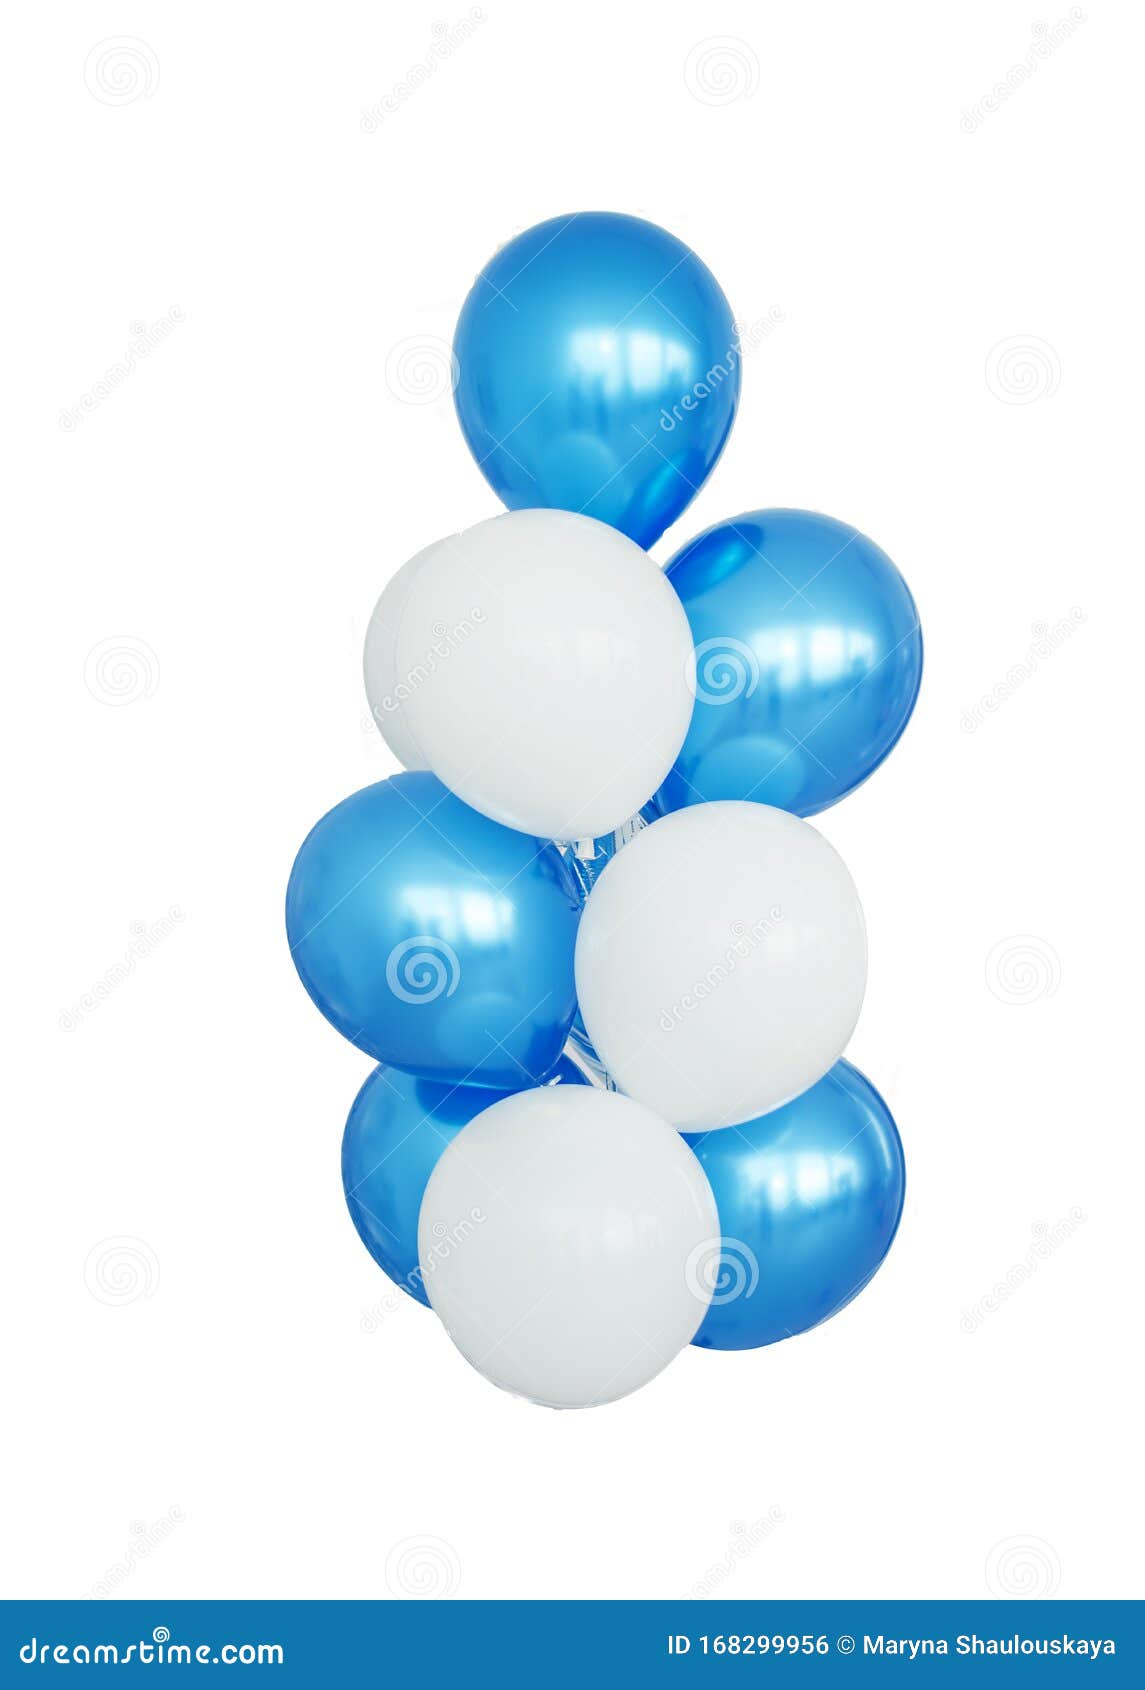 https://thumbs.dreamstime.com/z/globos-azules-y-blancos-aislados-sobre-fondo-blanco-nido-168299956.jpg